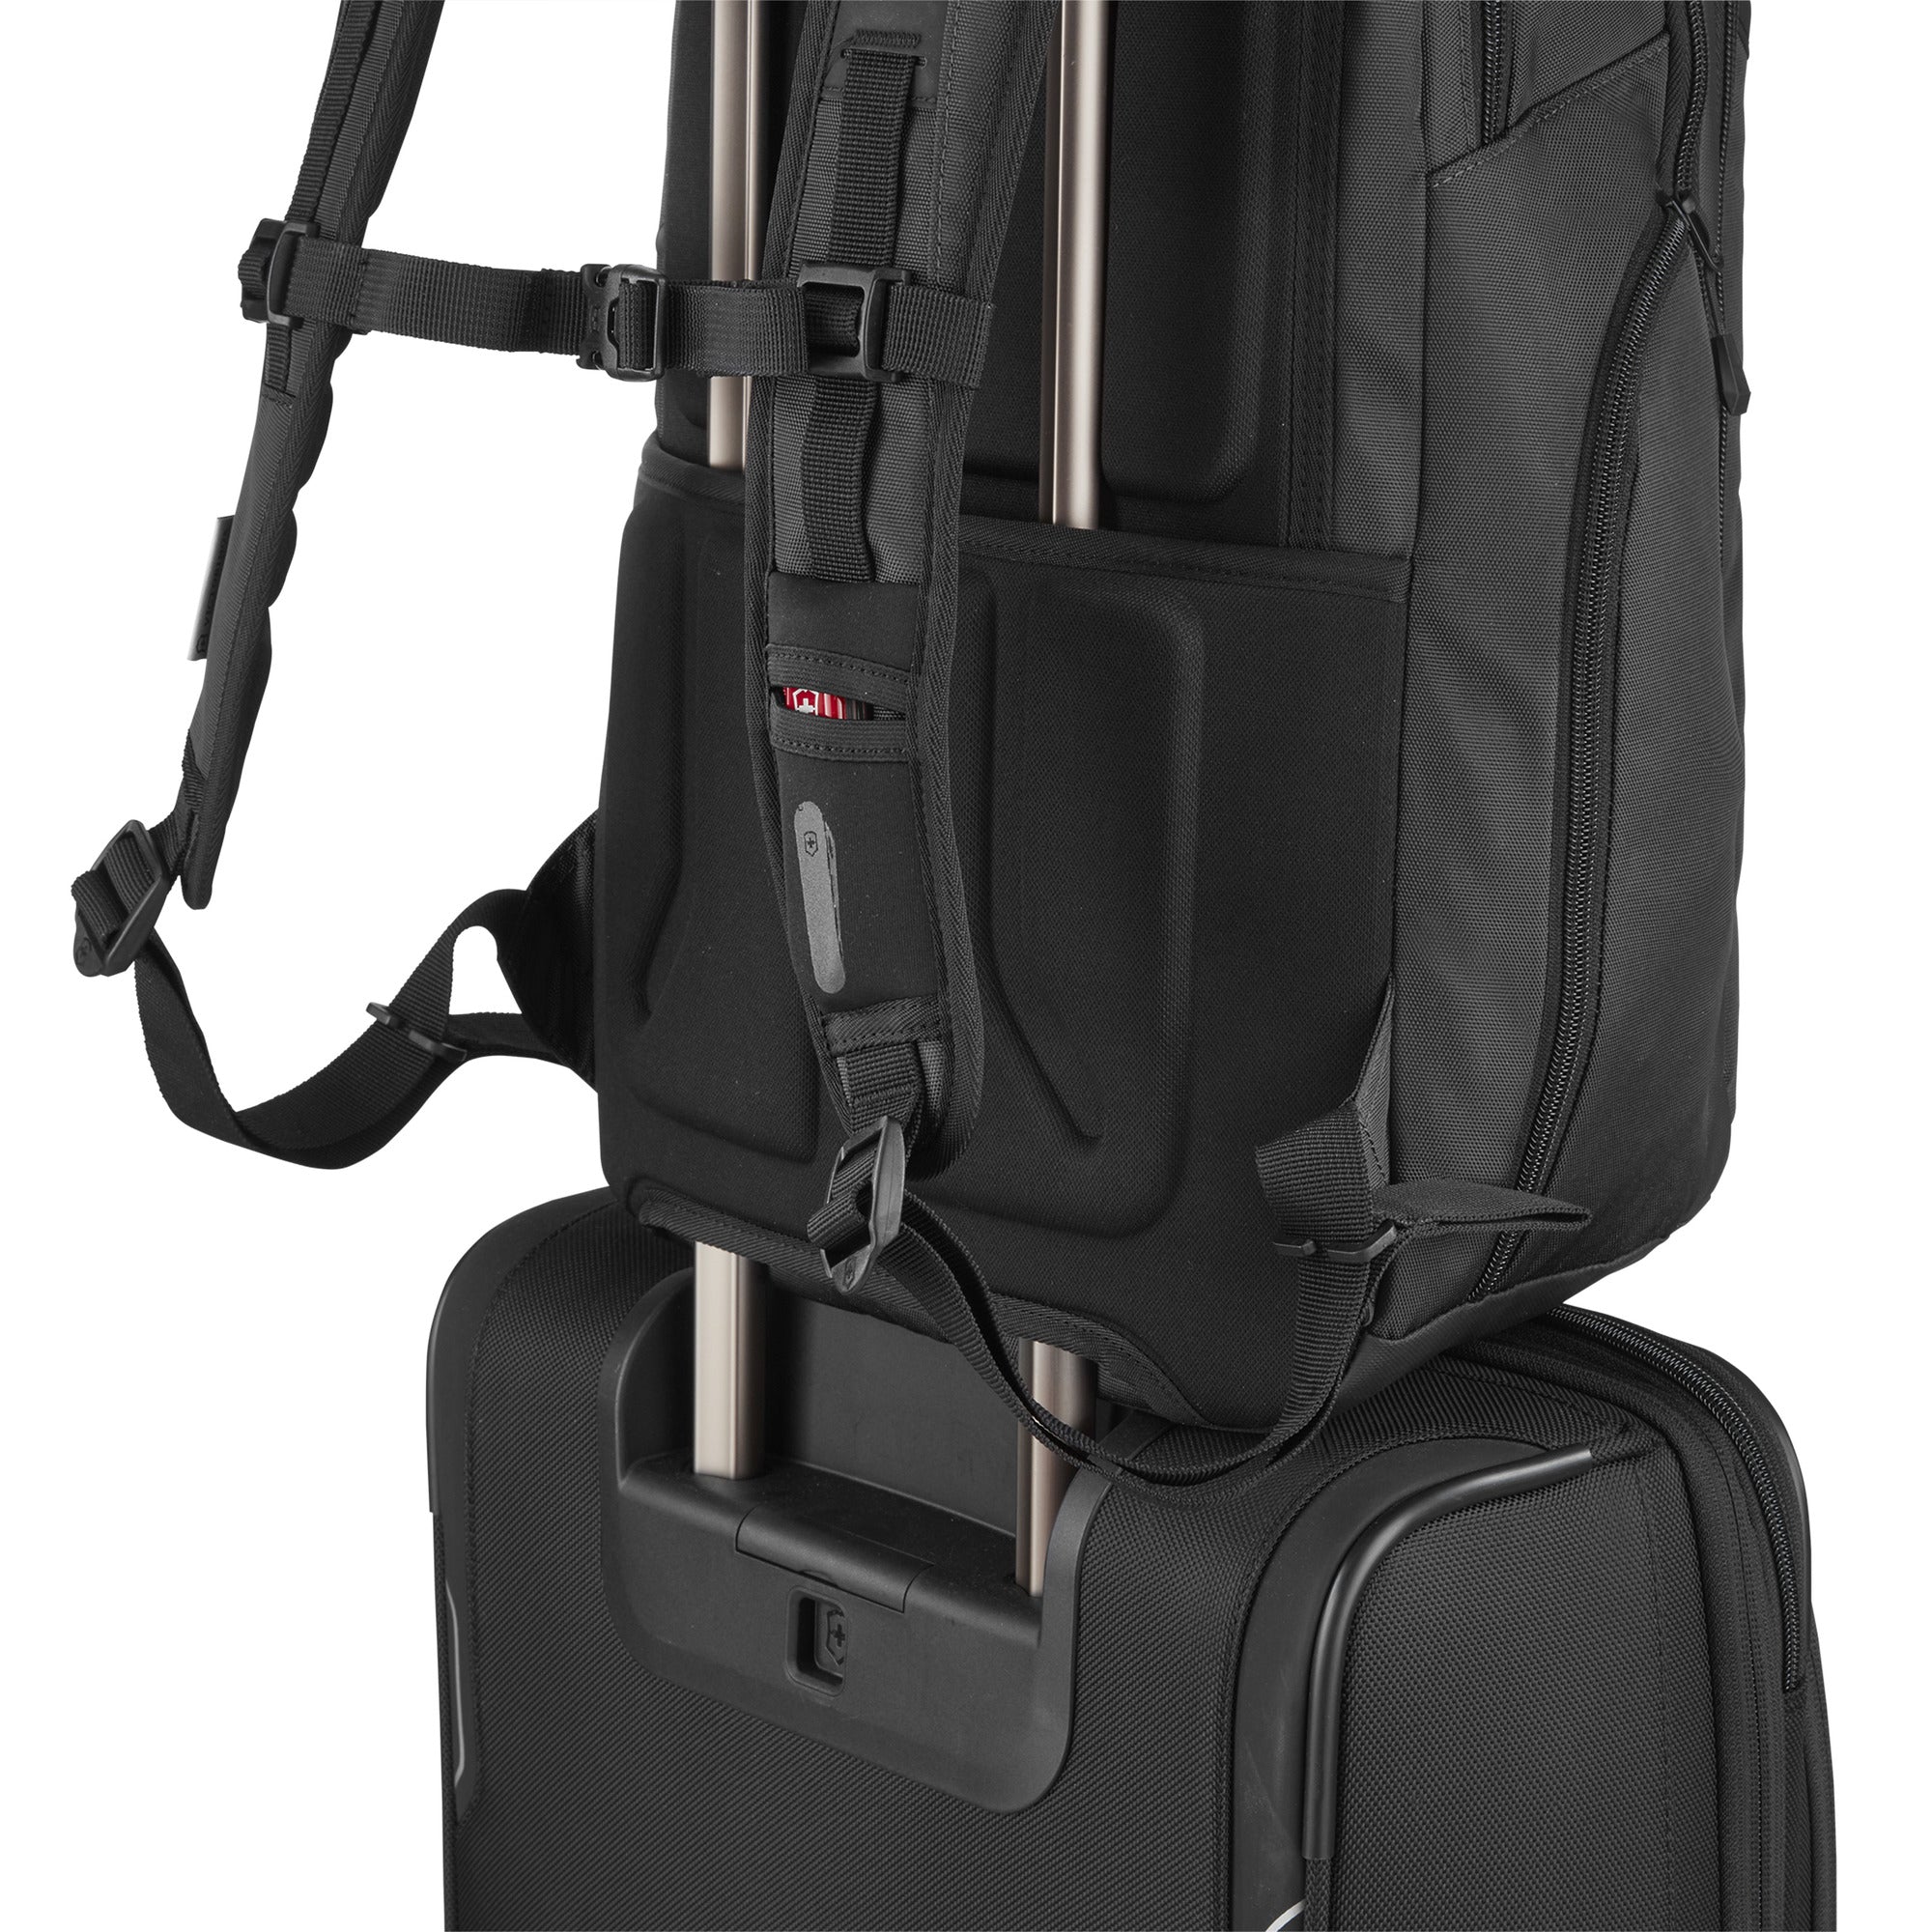 VICTORINOX Altmont Original Vertical-Zip Laptop Backpack (Black) - bag scene Hornsby